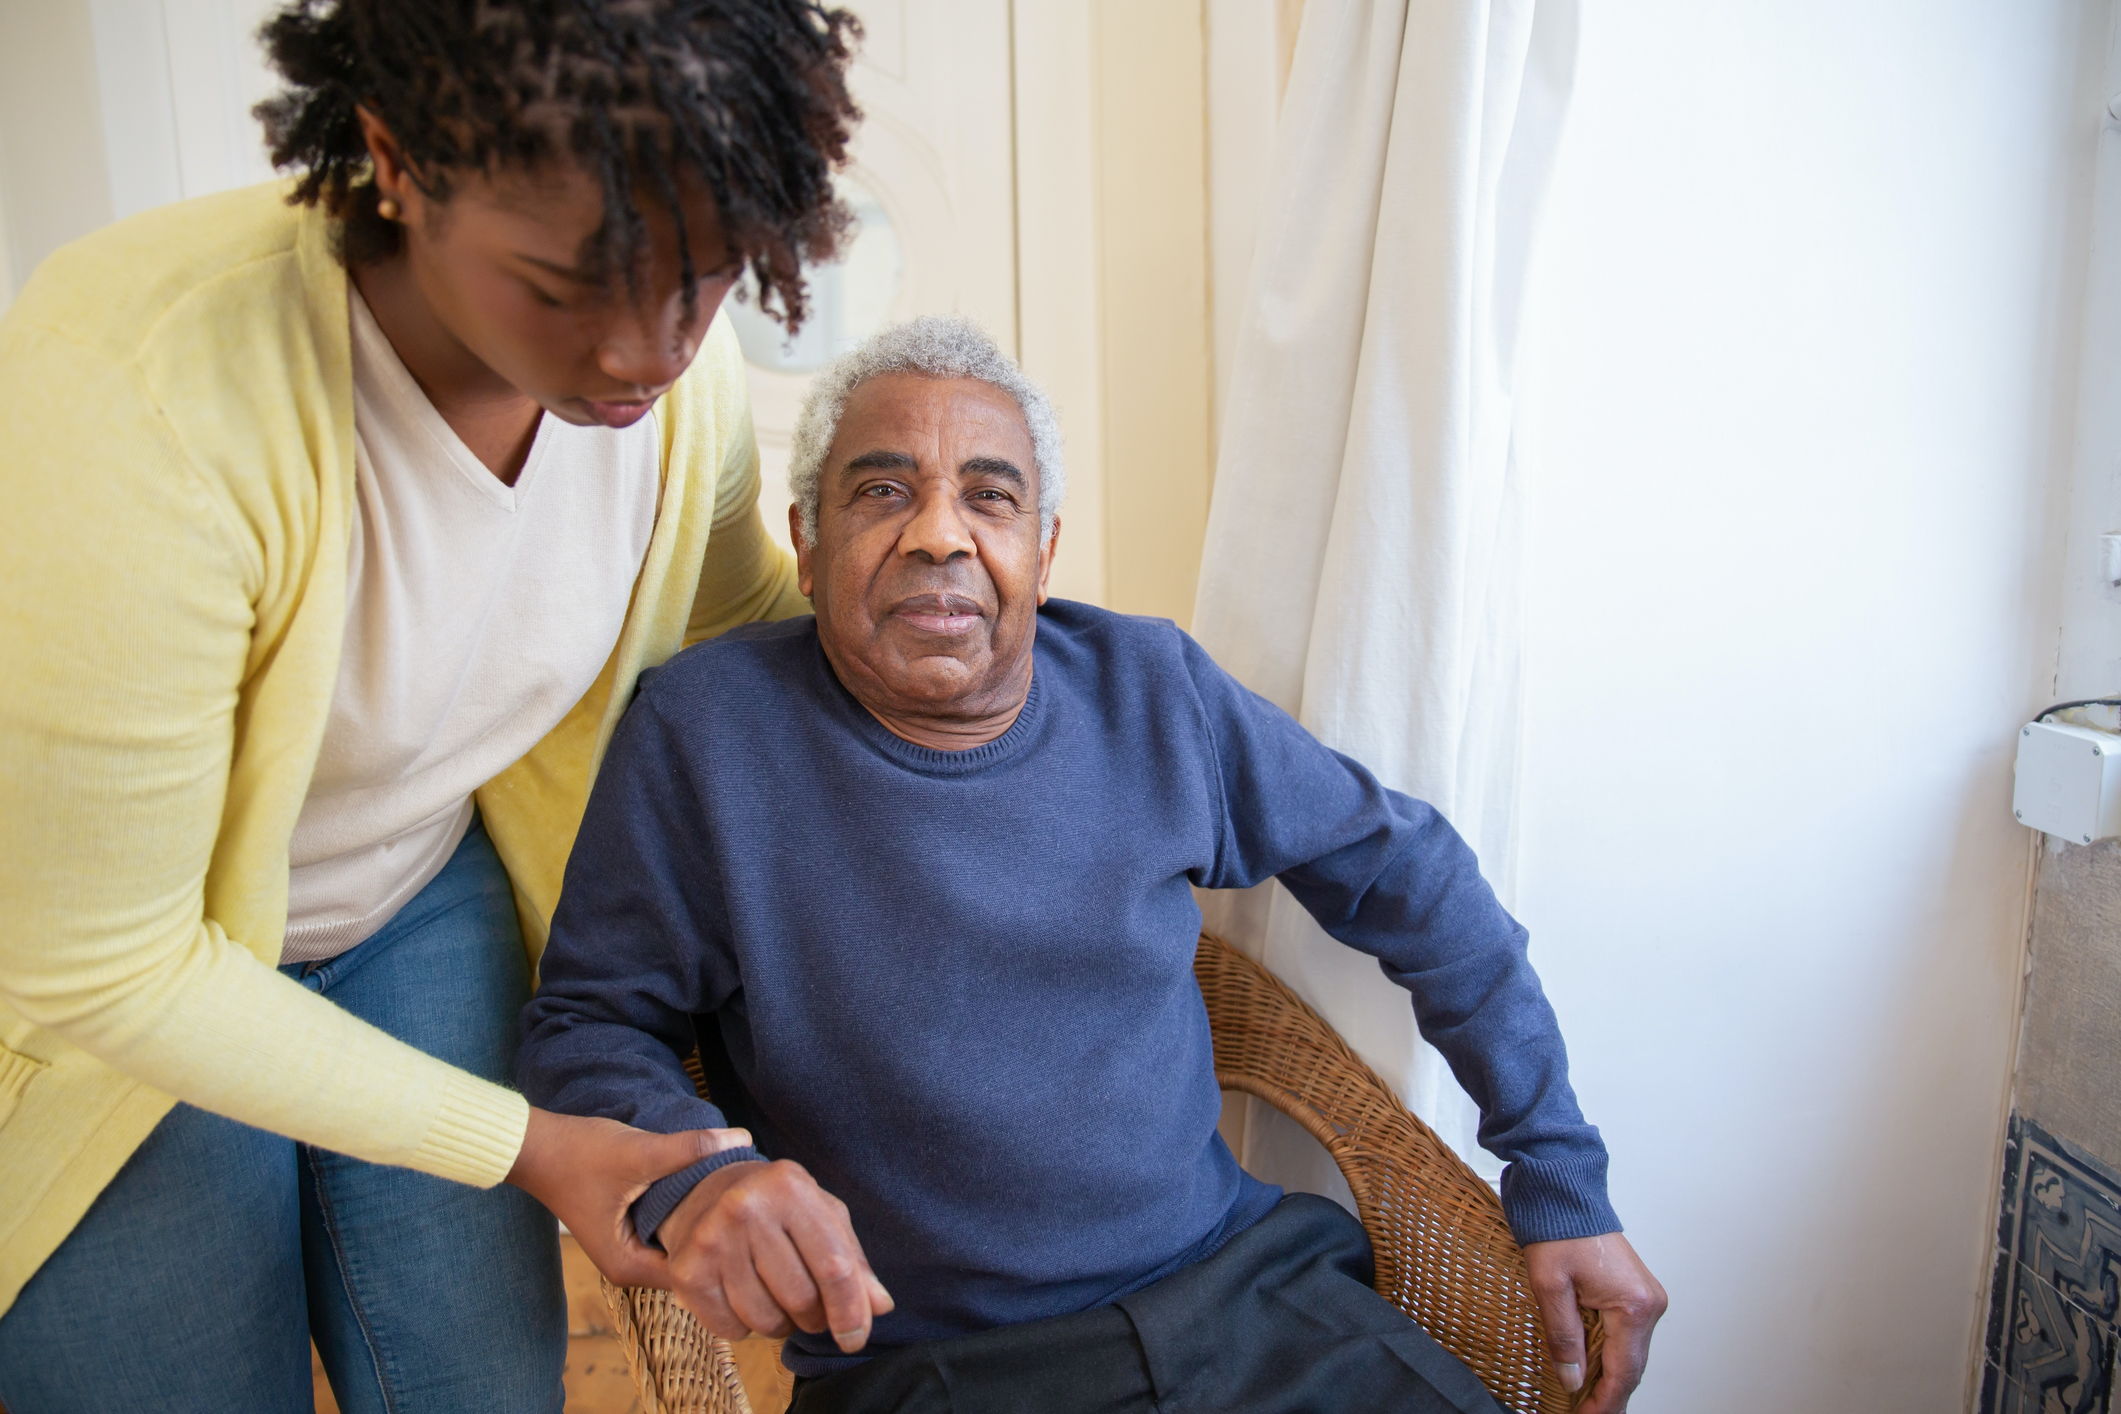 Elder Abuse in the USA: Understanding, Preventing, and Seeking Help